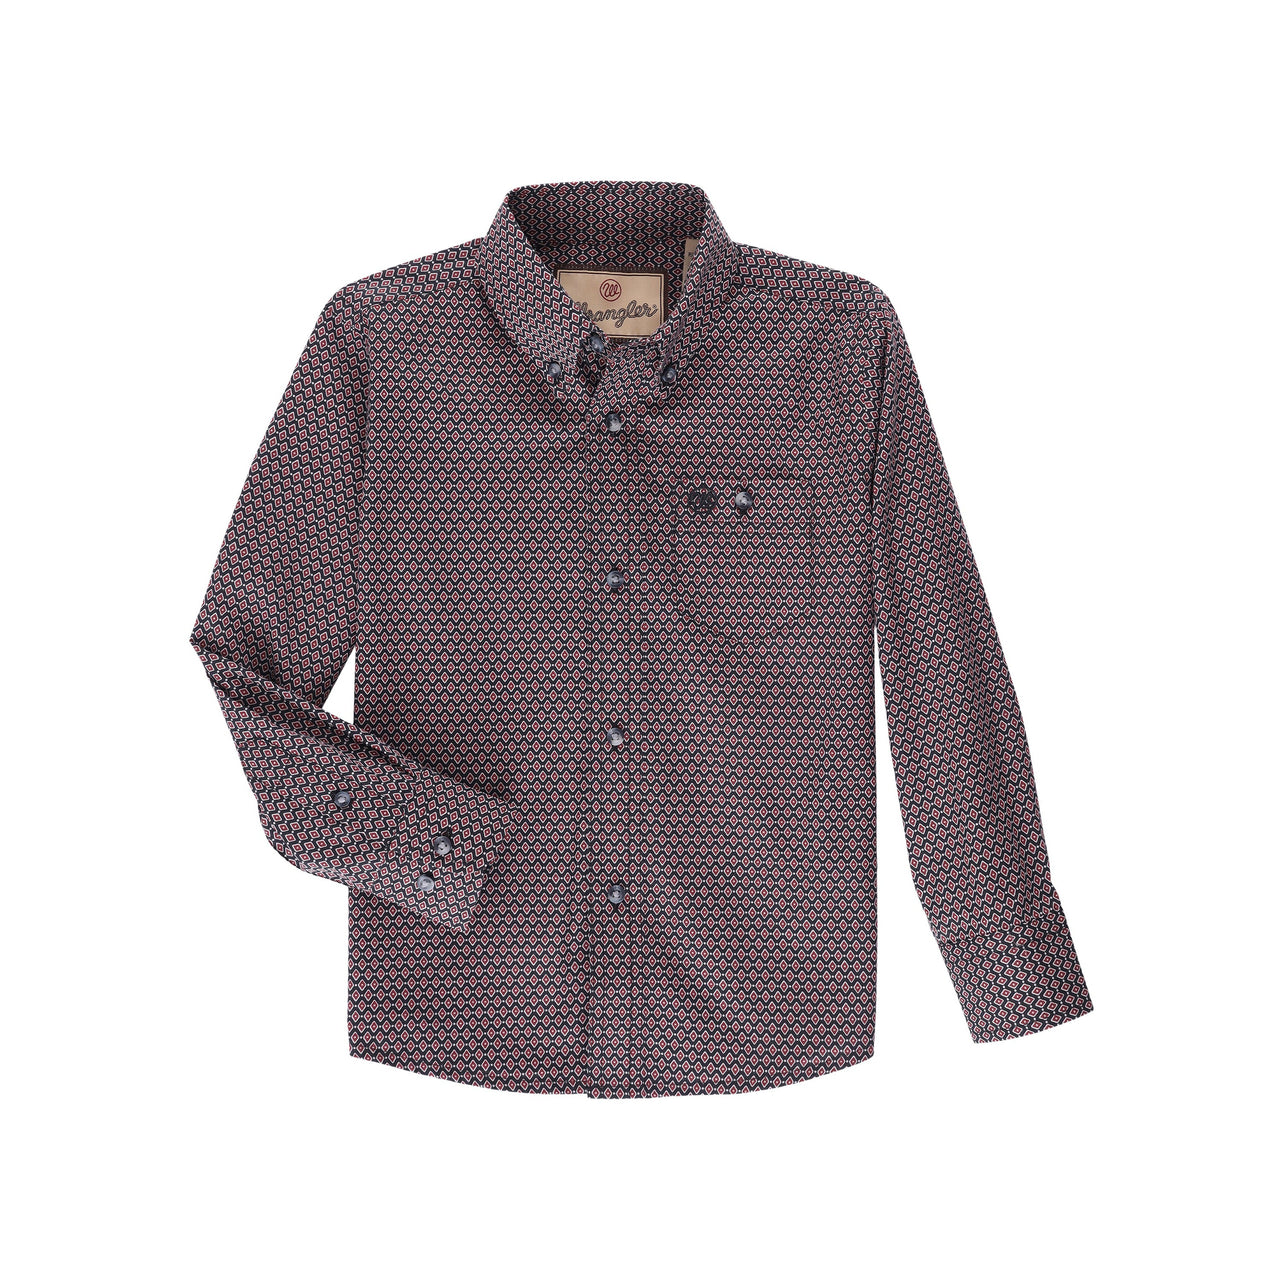 Wrangler Boy's Classic Long Sleeve Shirt - Burgundy